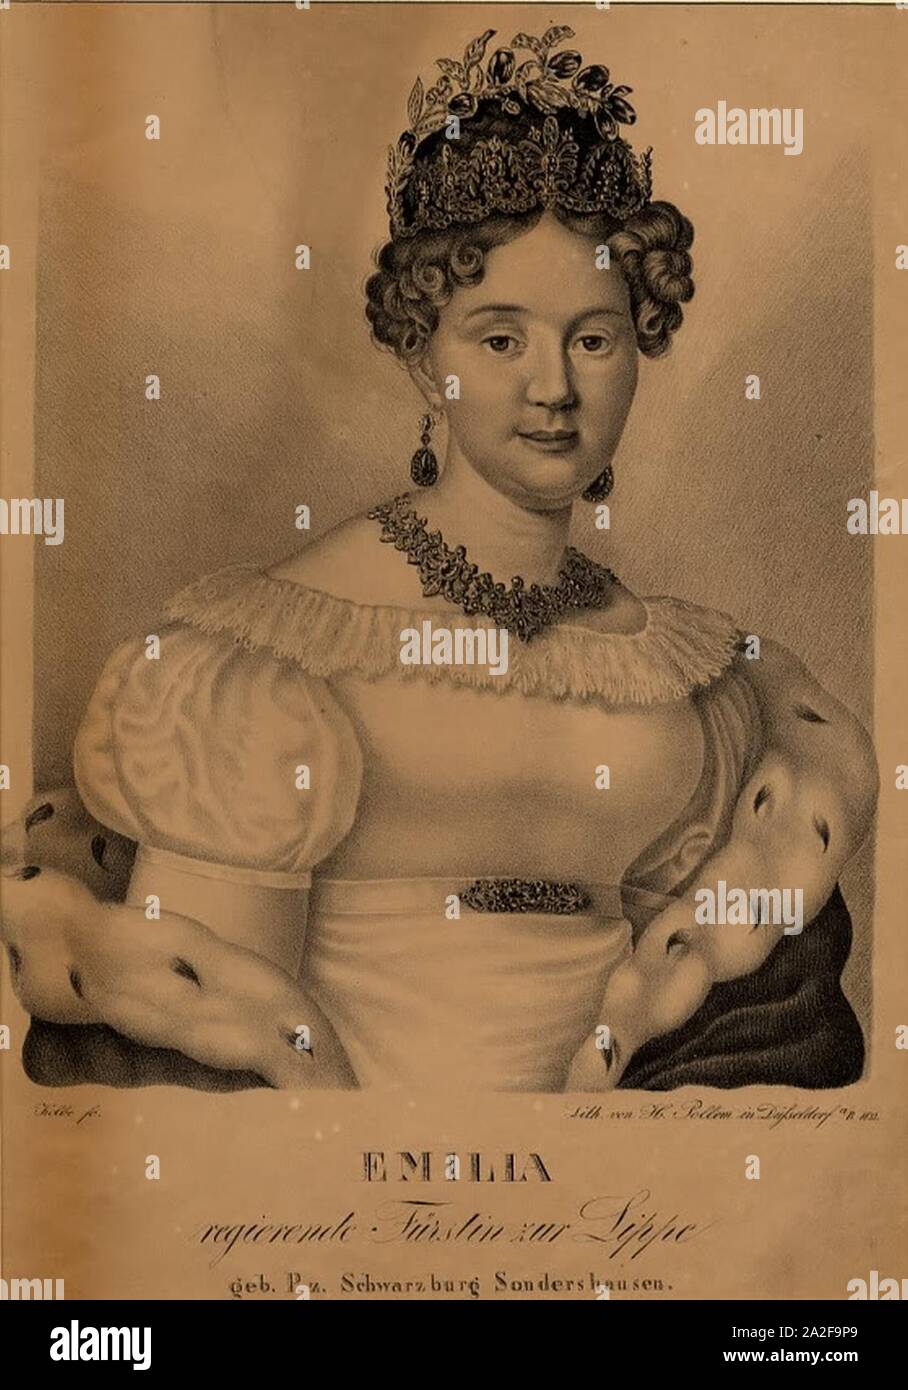 Emilia of Schwarzburg-Sondershausen, Princesse of Lippe. Stock Photo